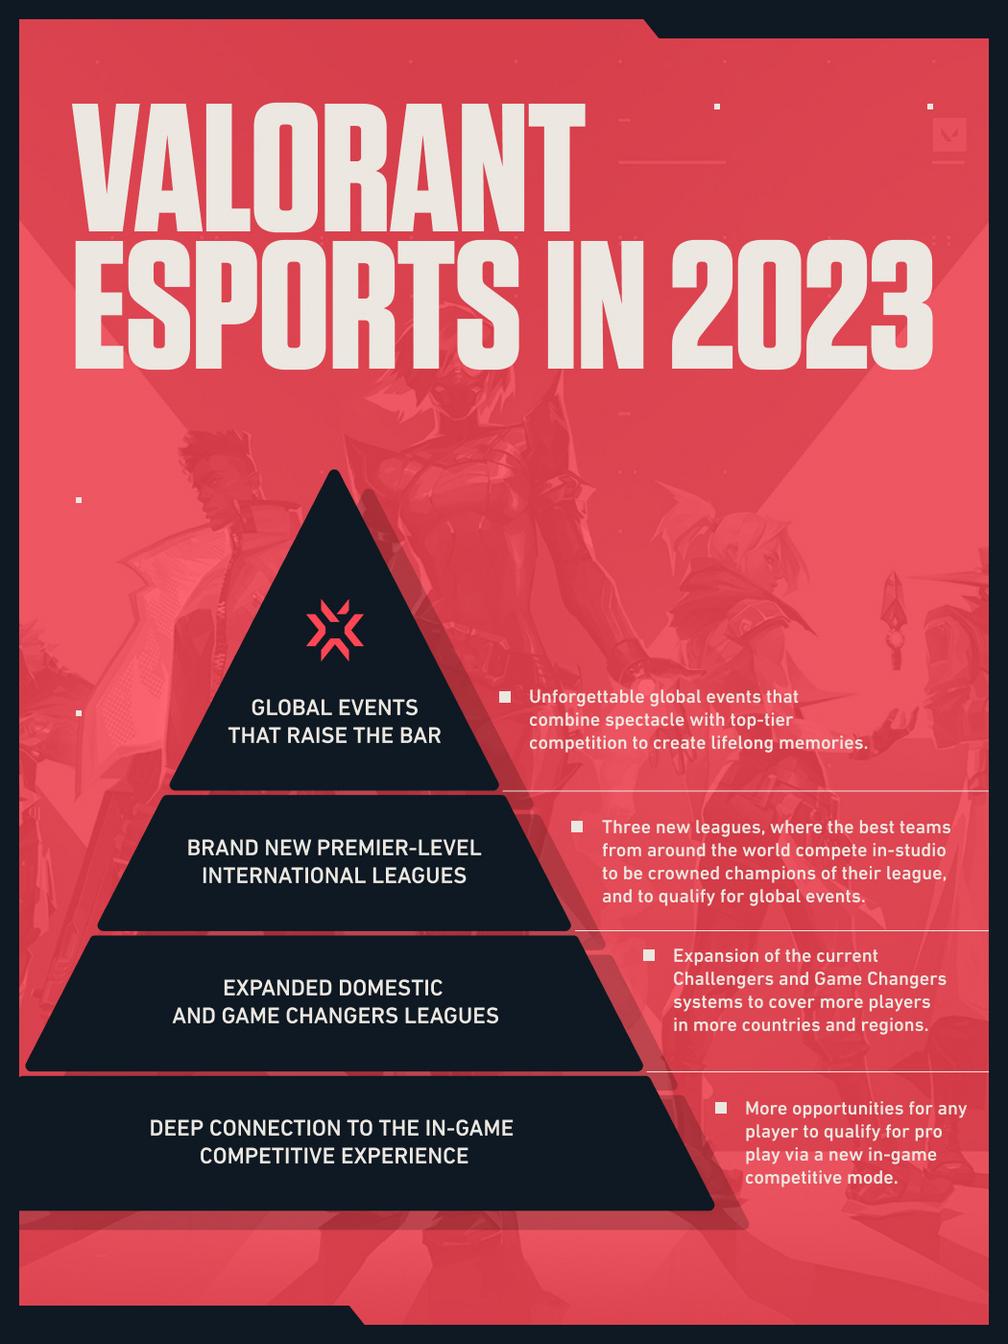 E-sport i gaming w Polsce